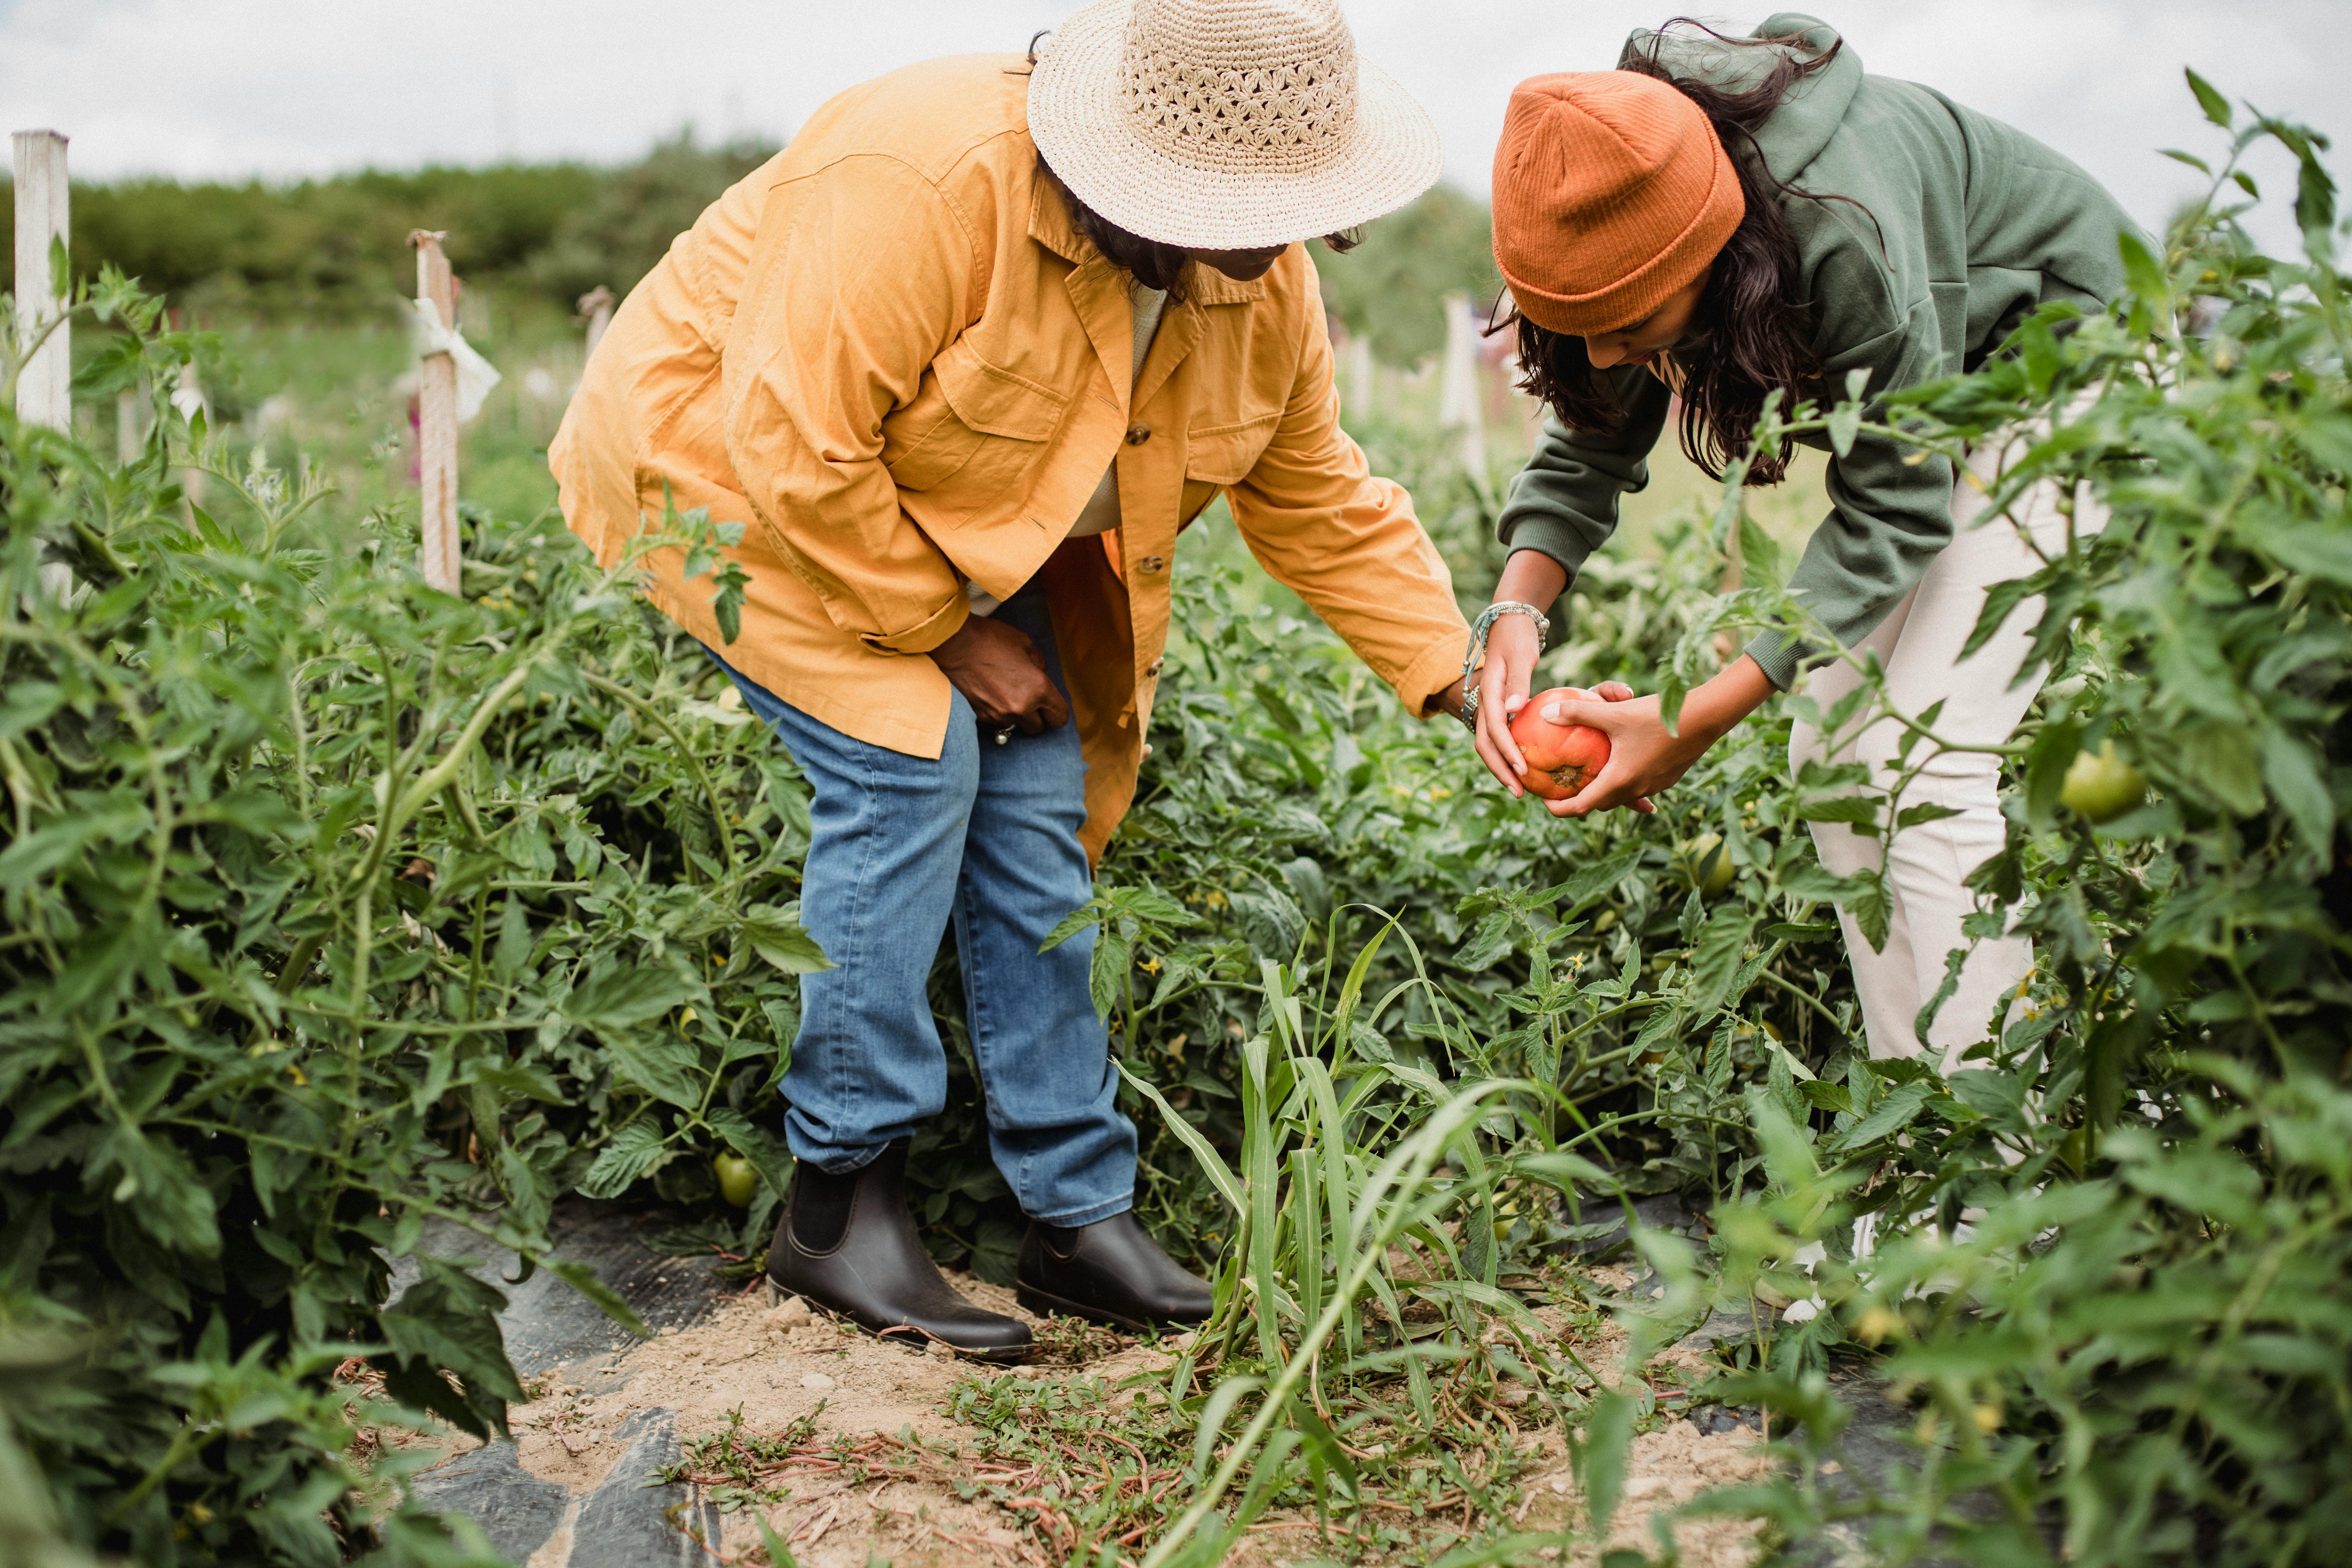 Gardeners harvesting tomatoes